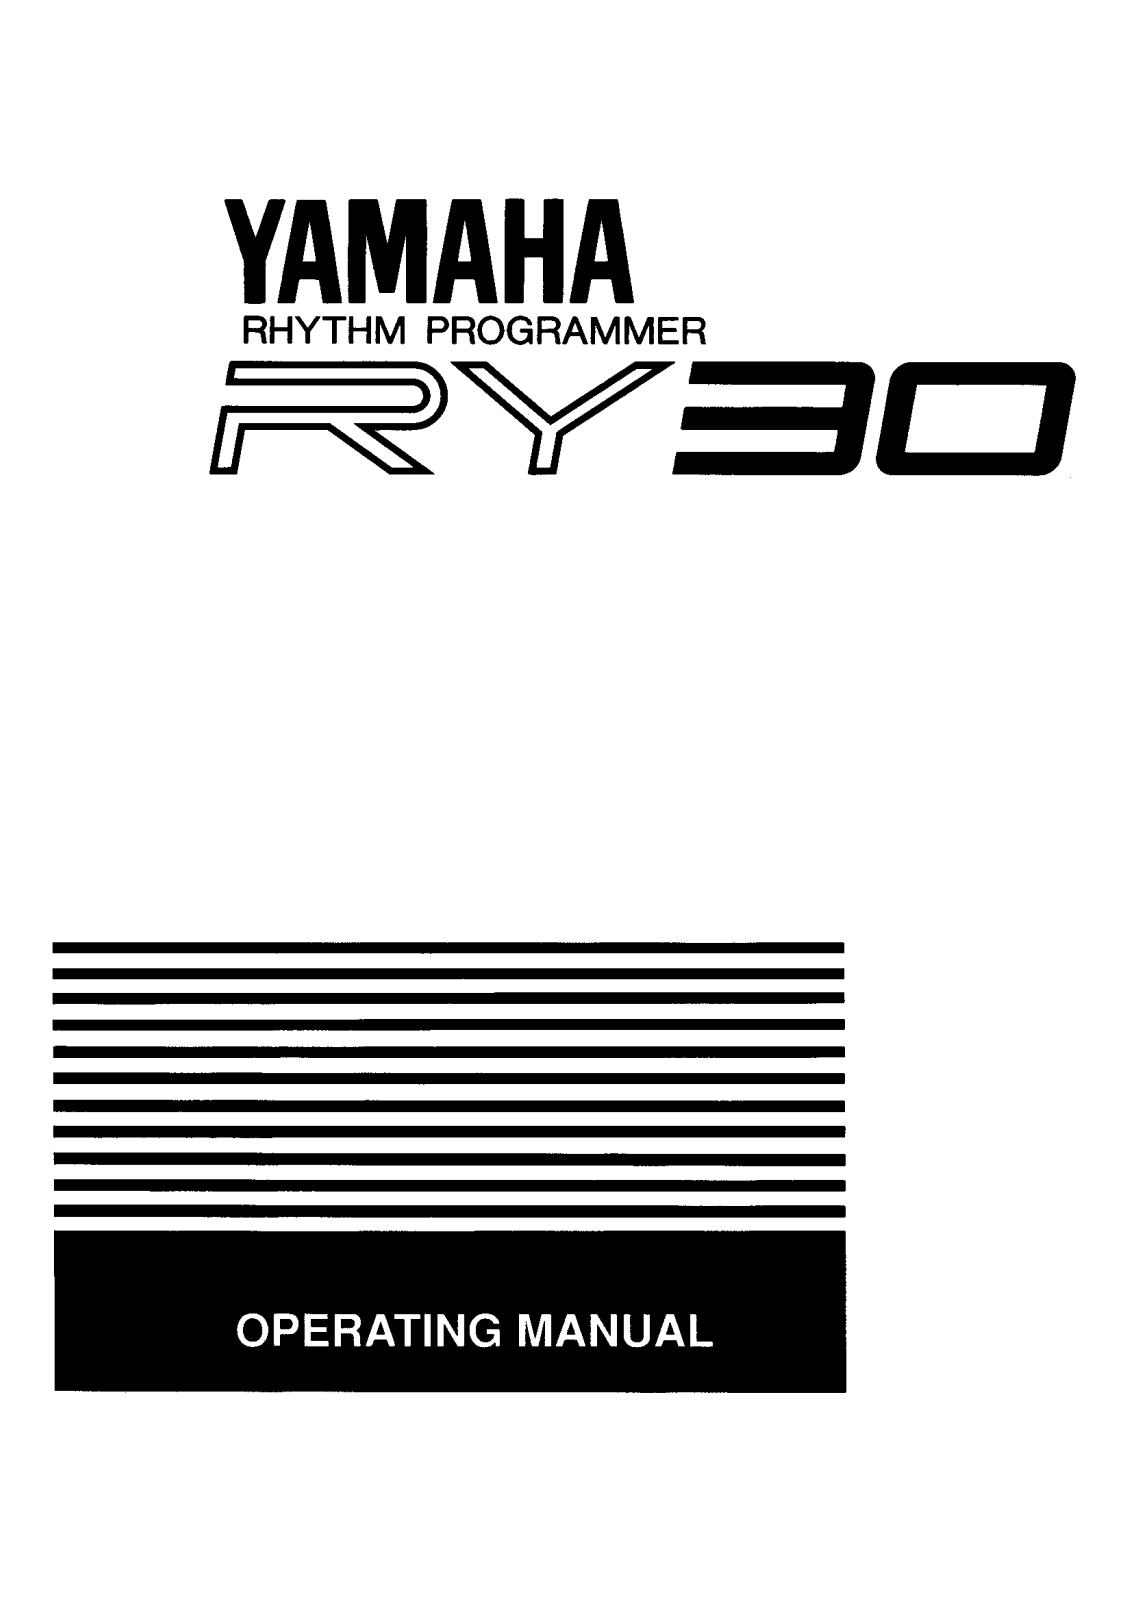 Yamaha RY30E User Manual